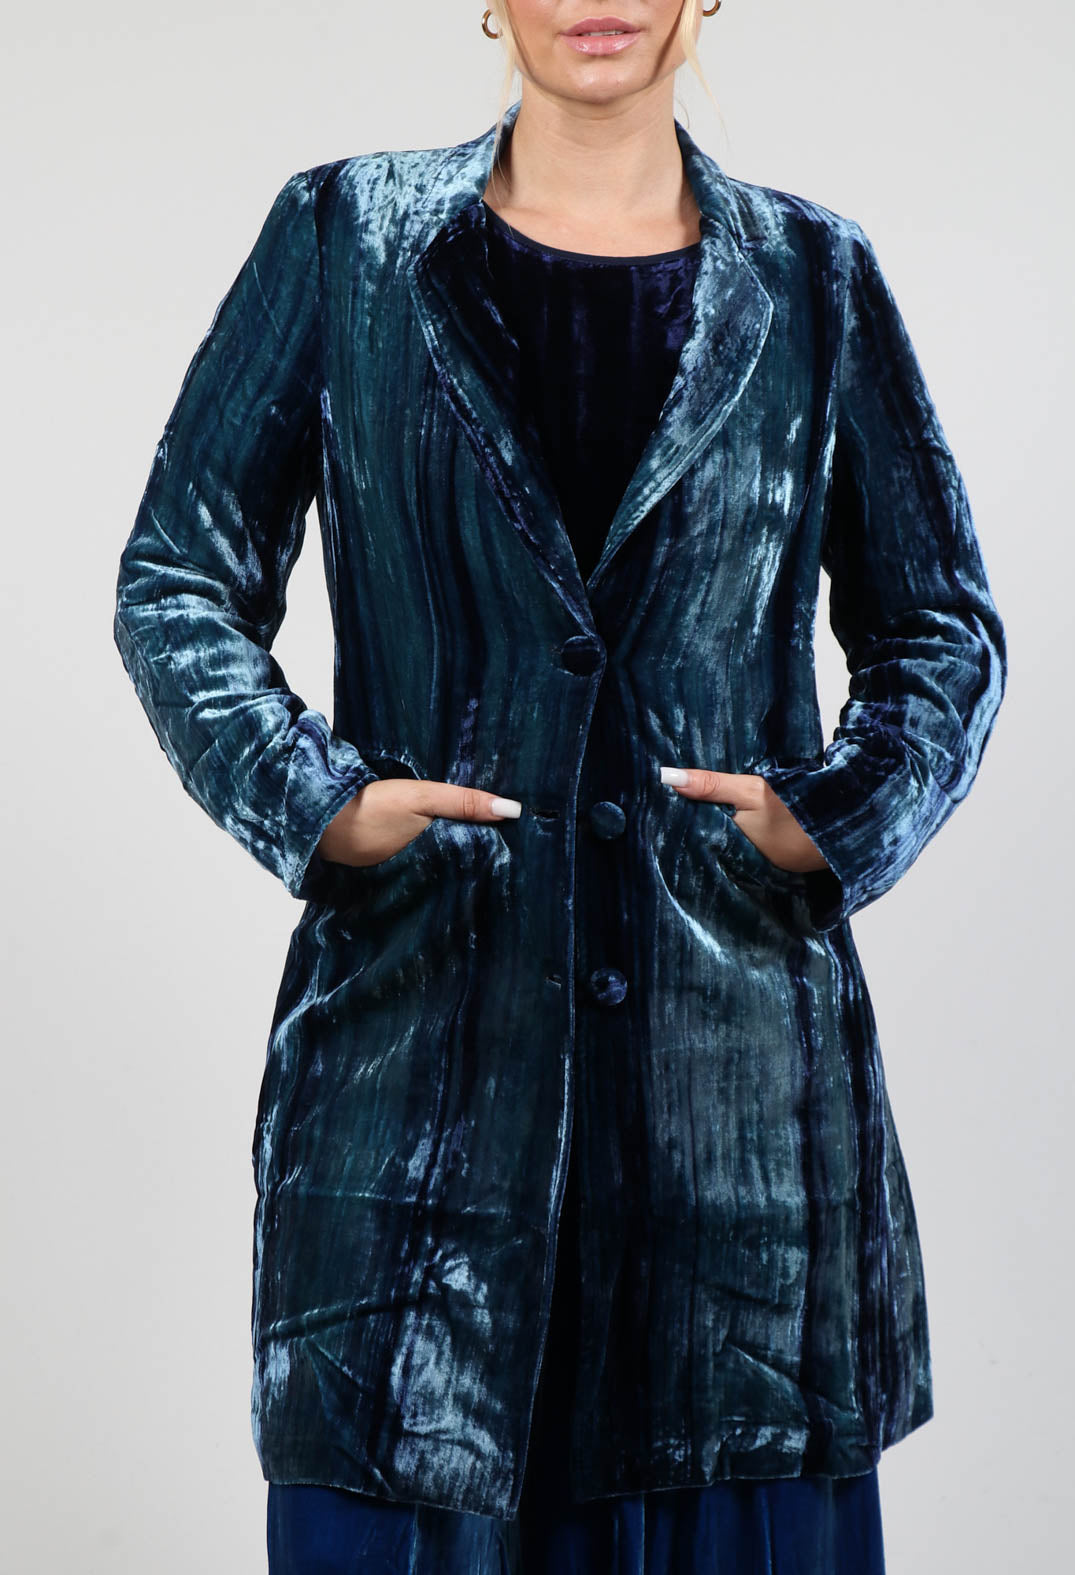 Colette Coat in Navy Blue and Aqua Stripe